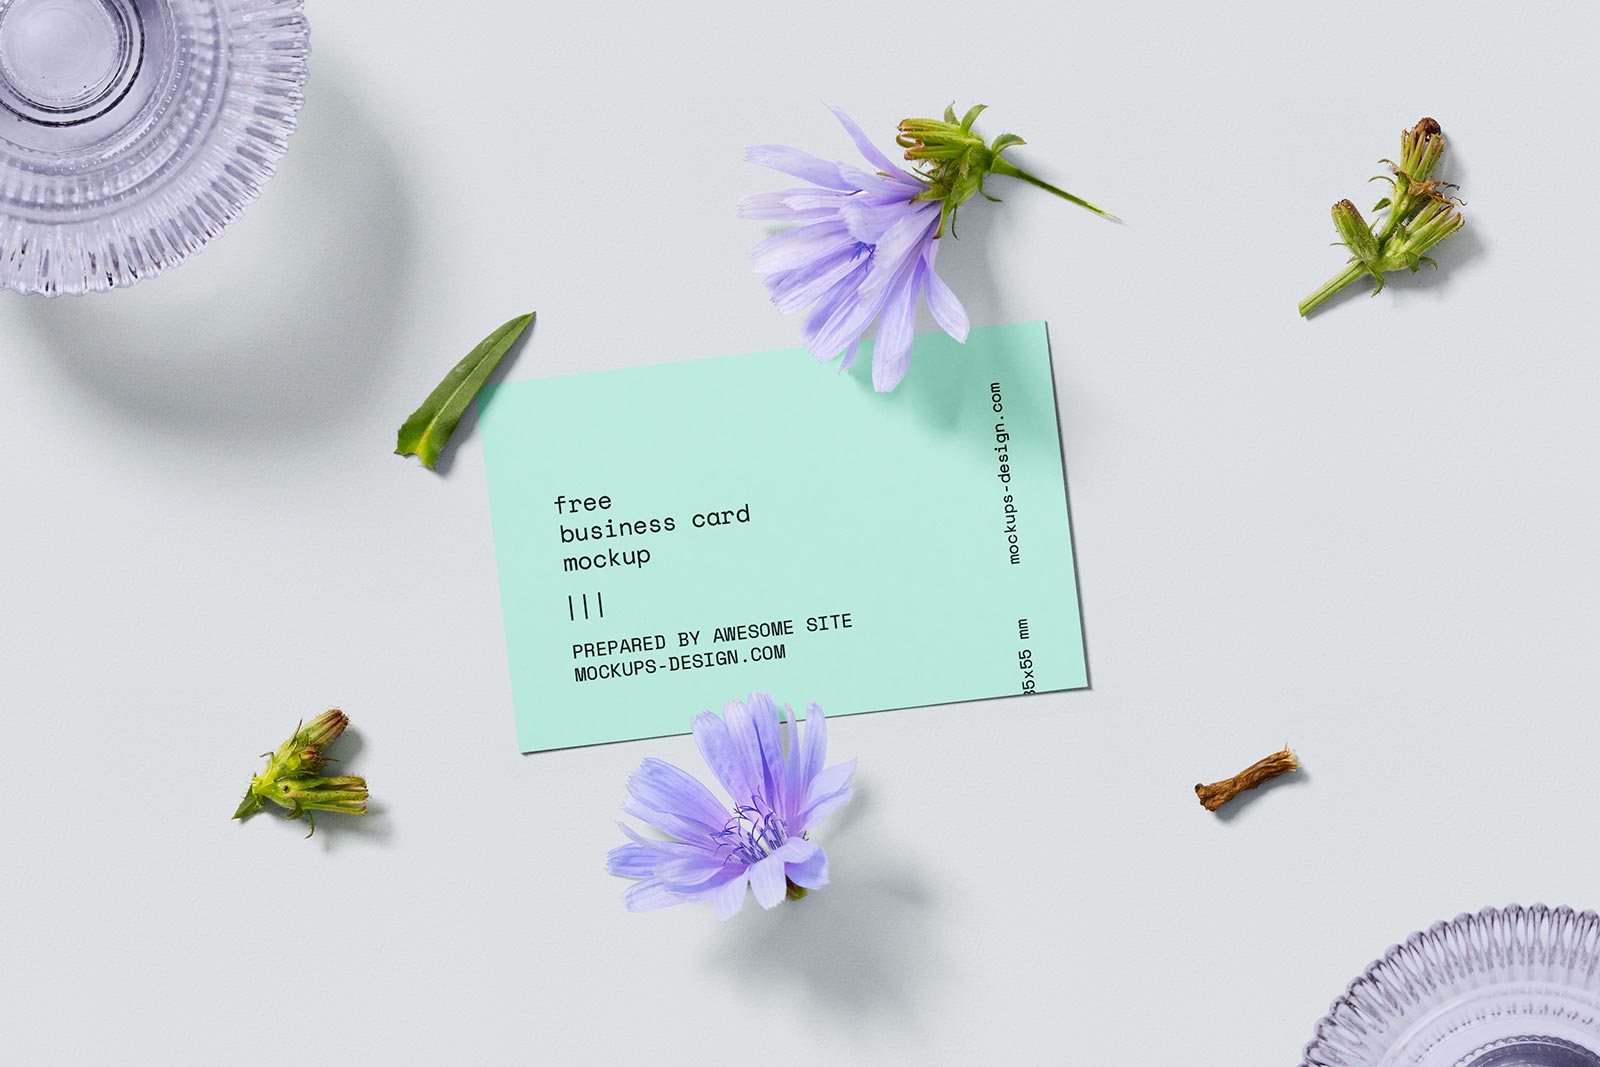 Визитная карточка с набором макета цветов